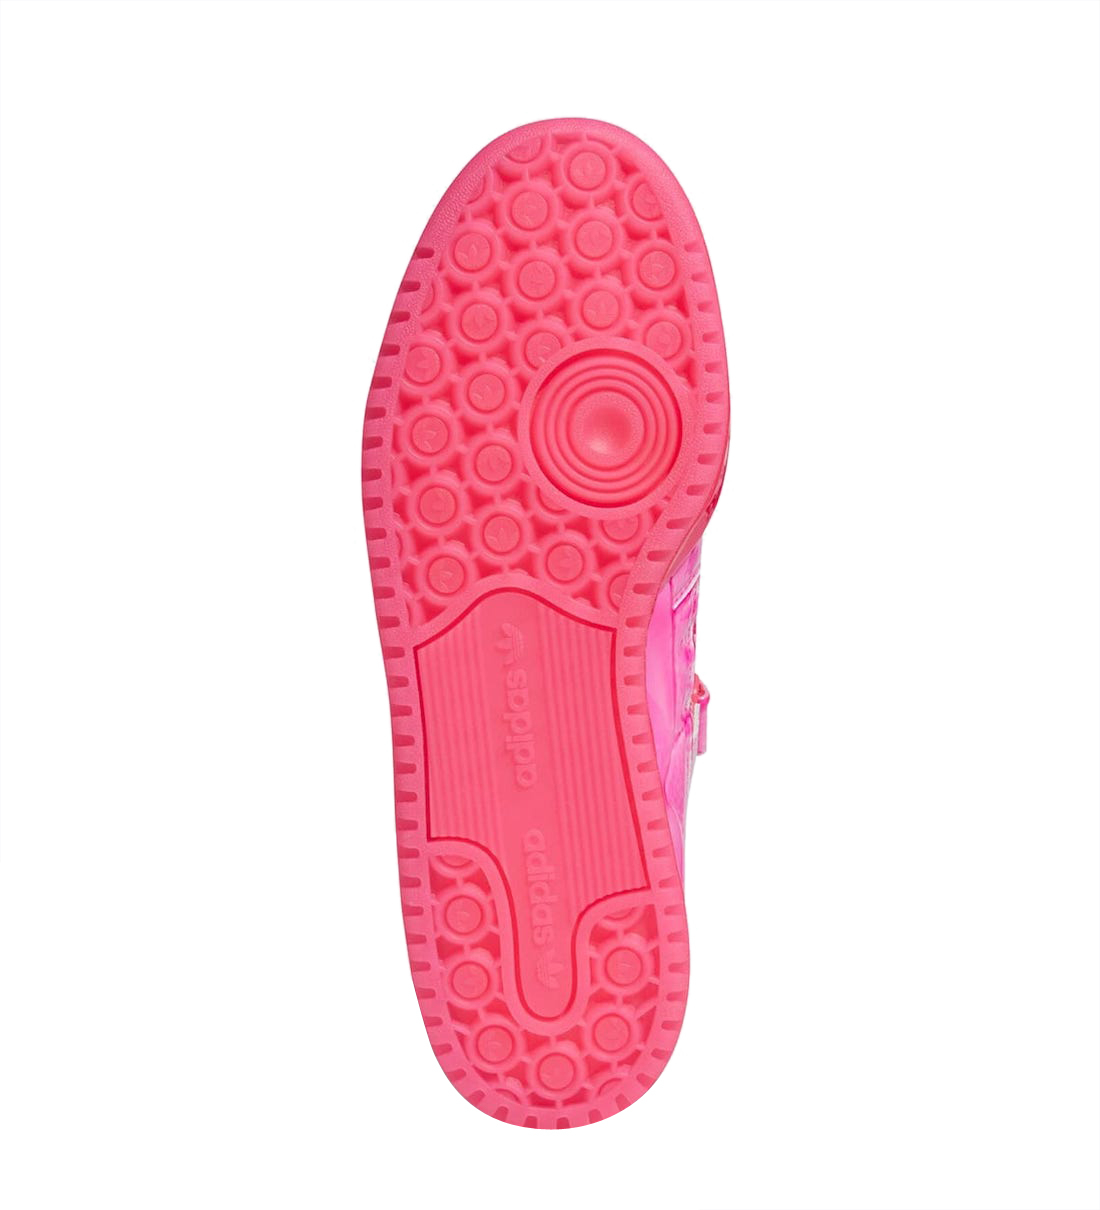 Jeremy Scott x adidas Forum Low Hot Pink GZ8818 - KicksOnFire.com